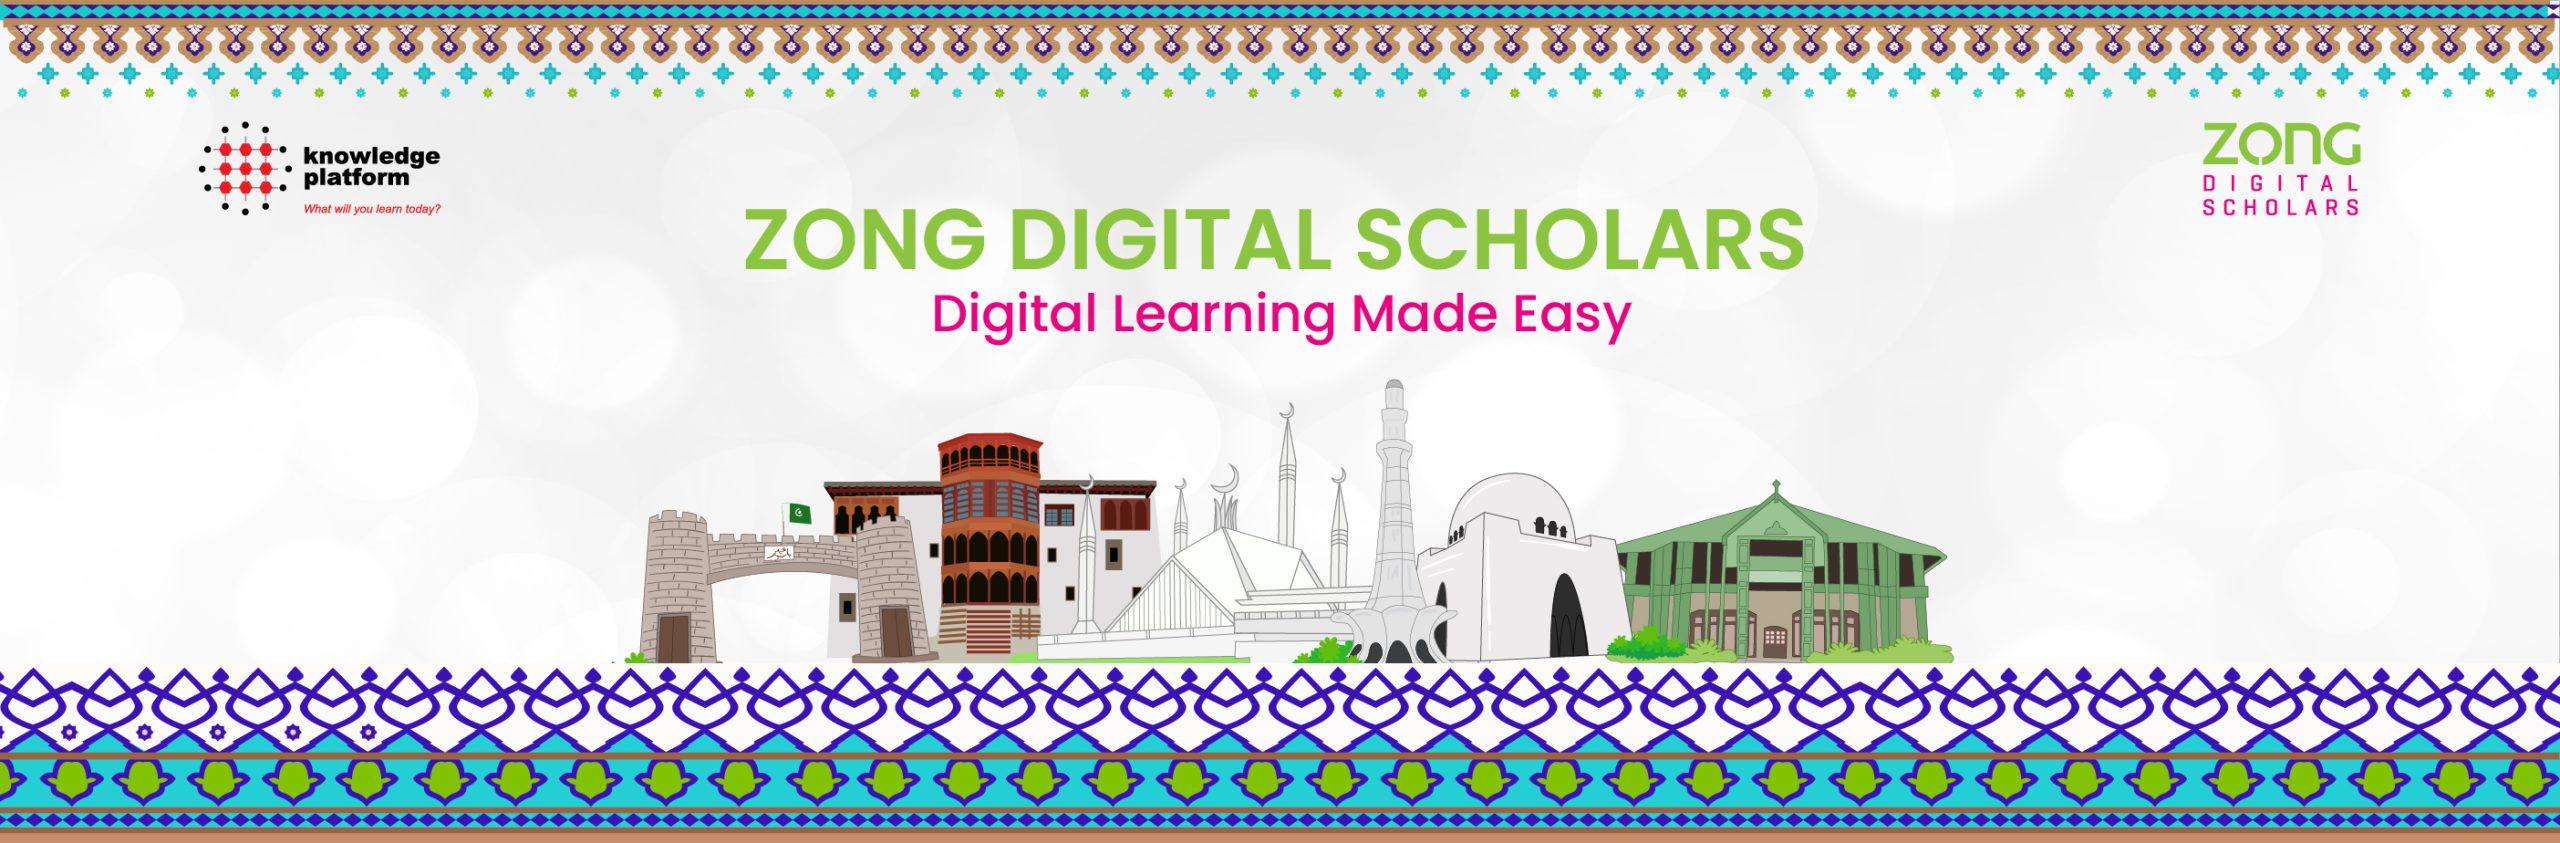 Zong Digital Scholar